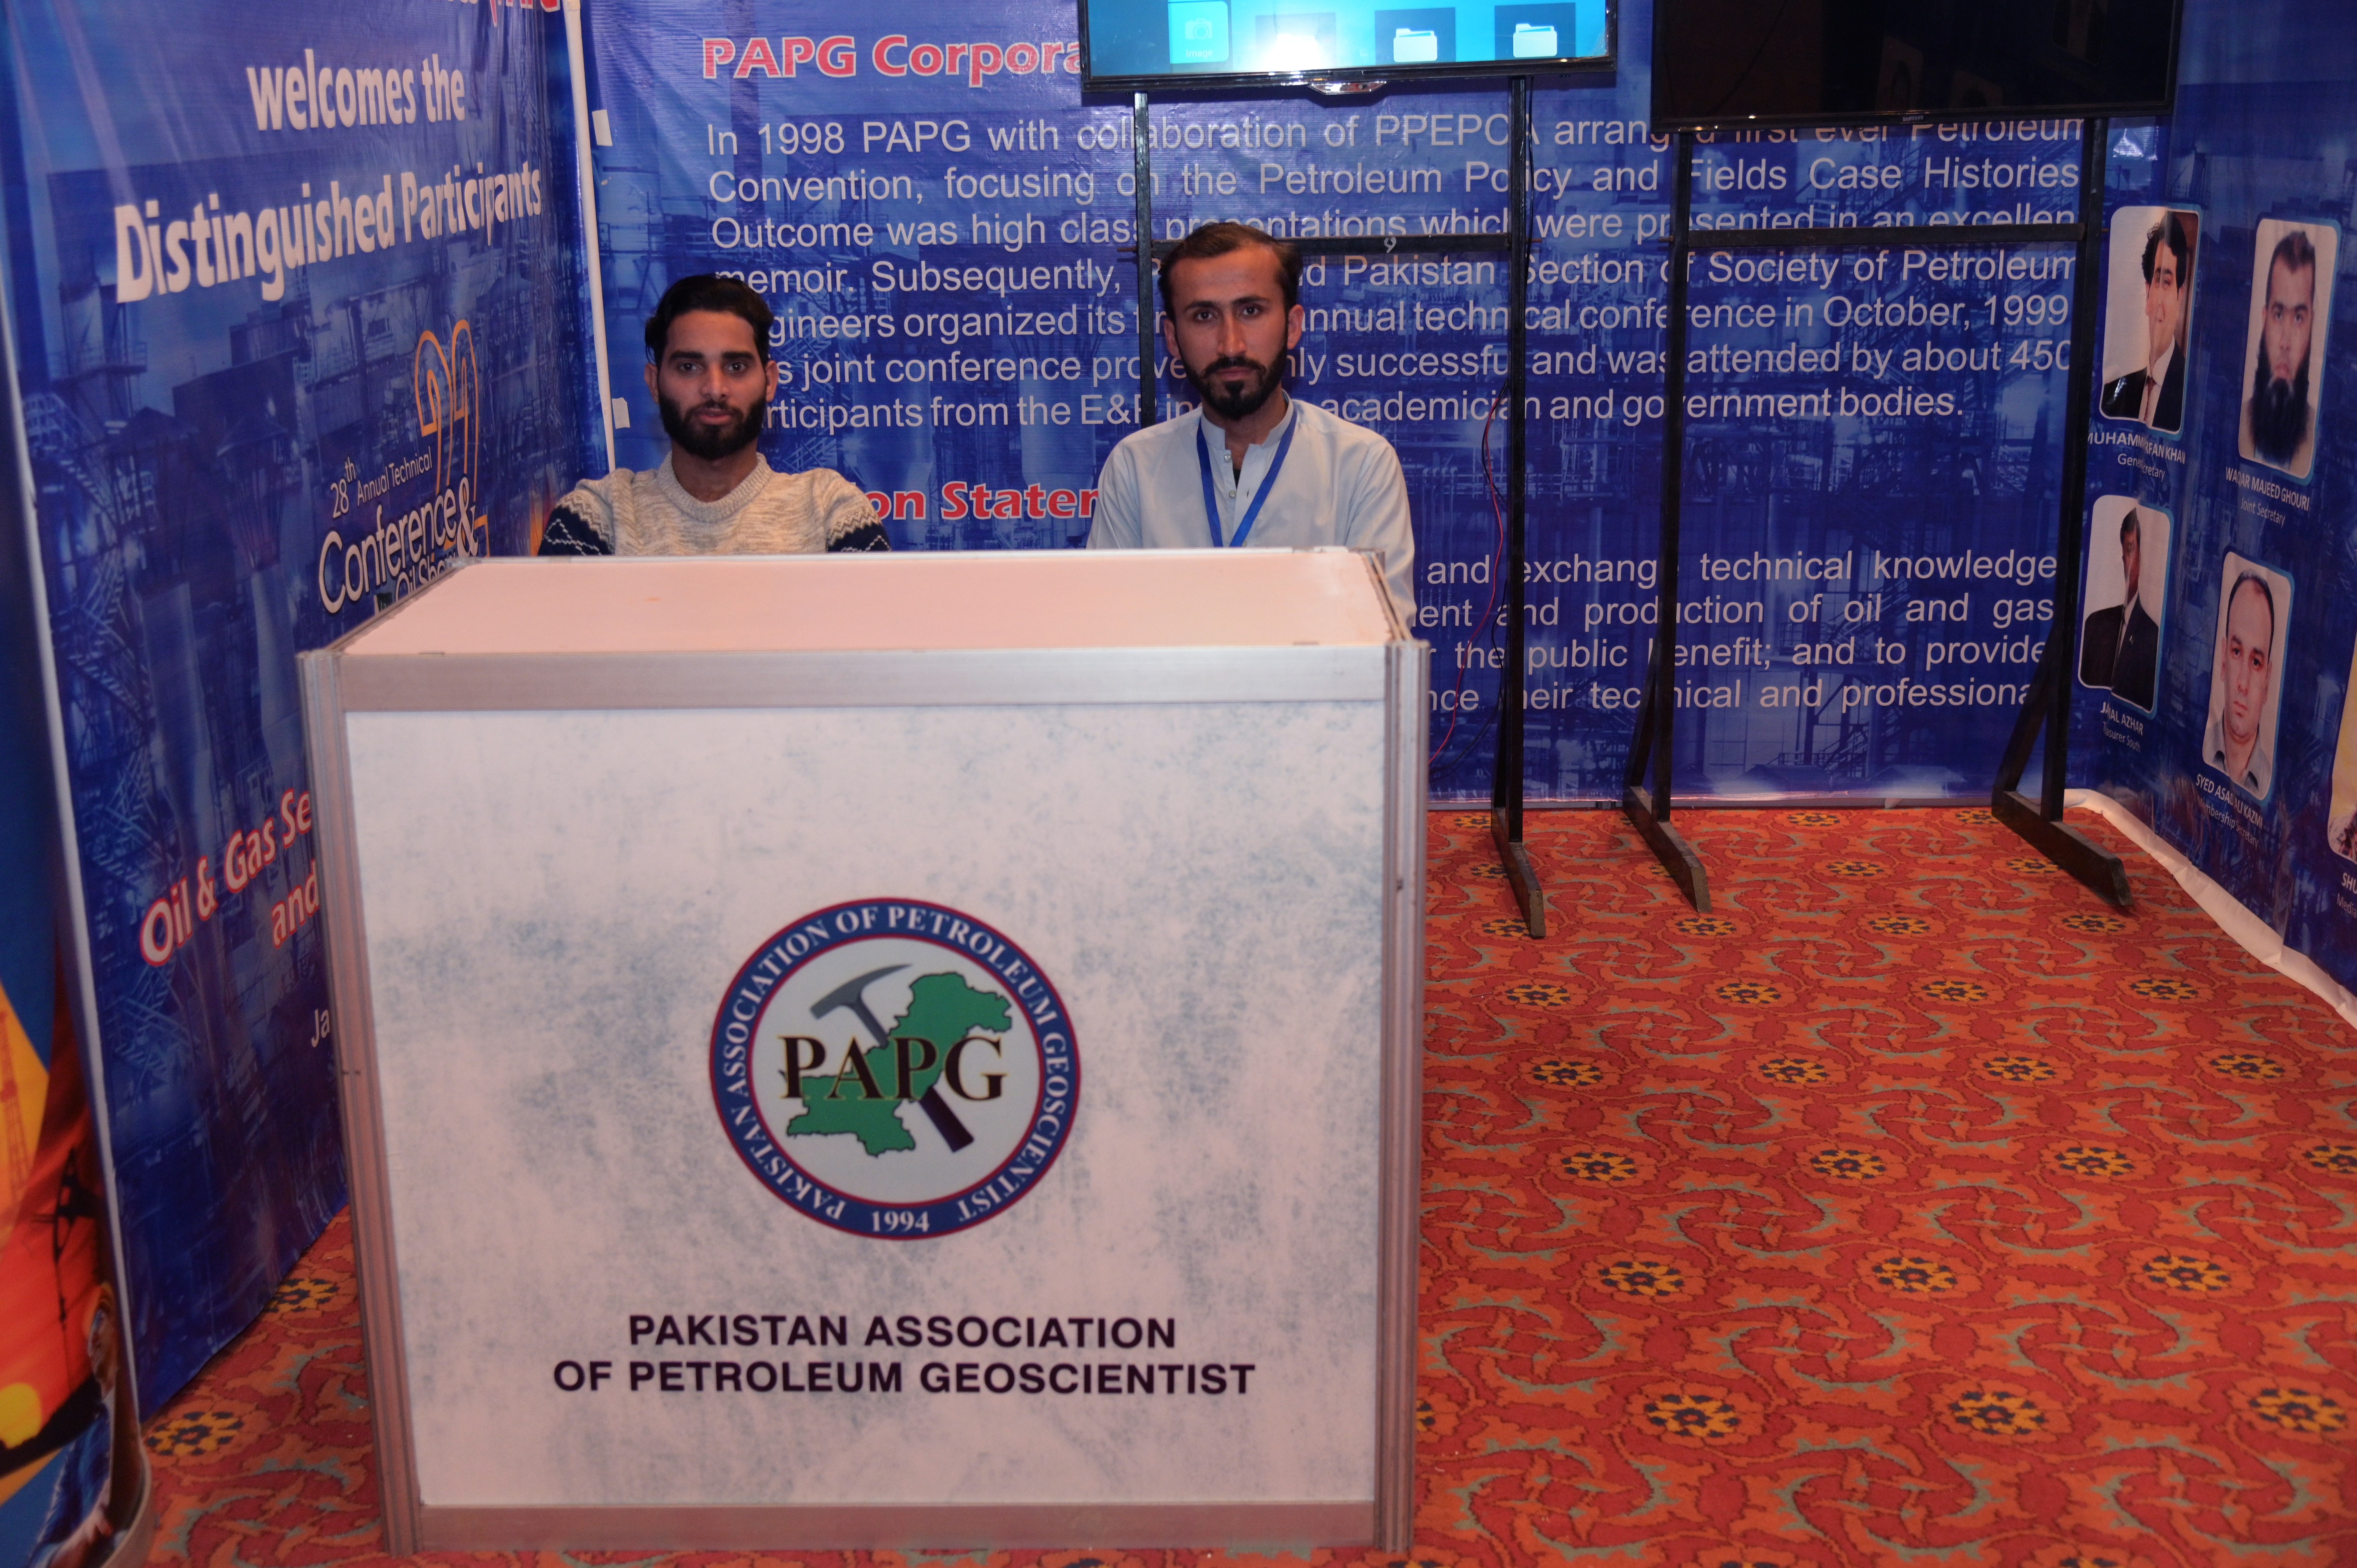 The representers of Pakistan Association of Petroleum Geoscientists (PAPG).